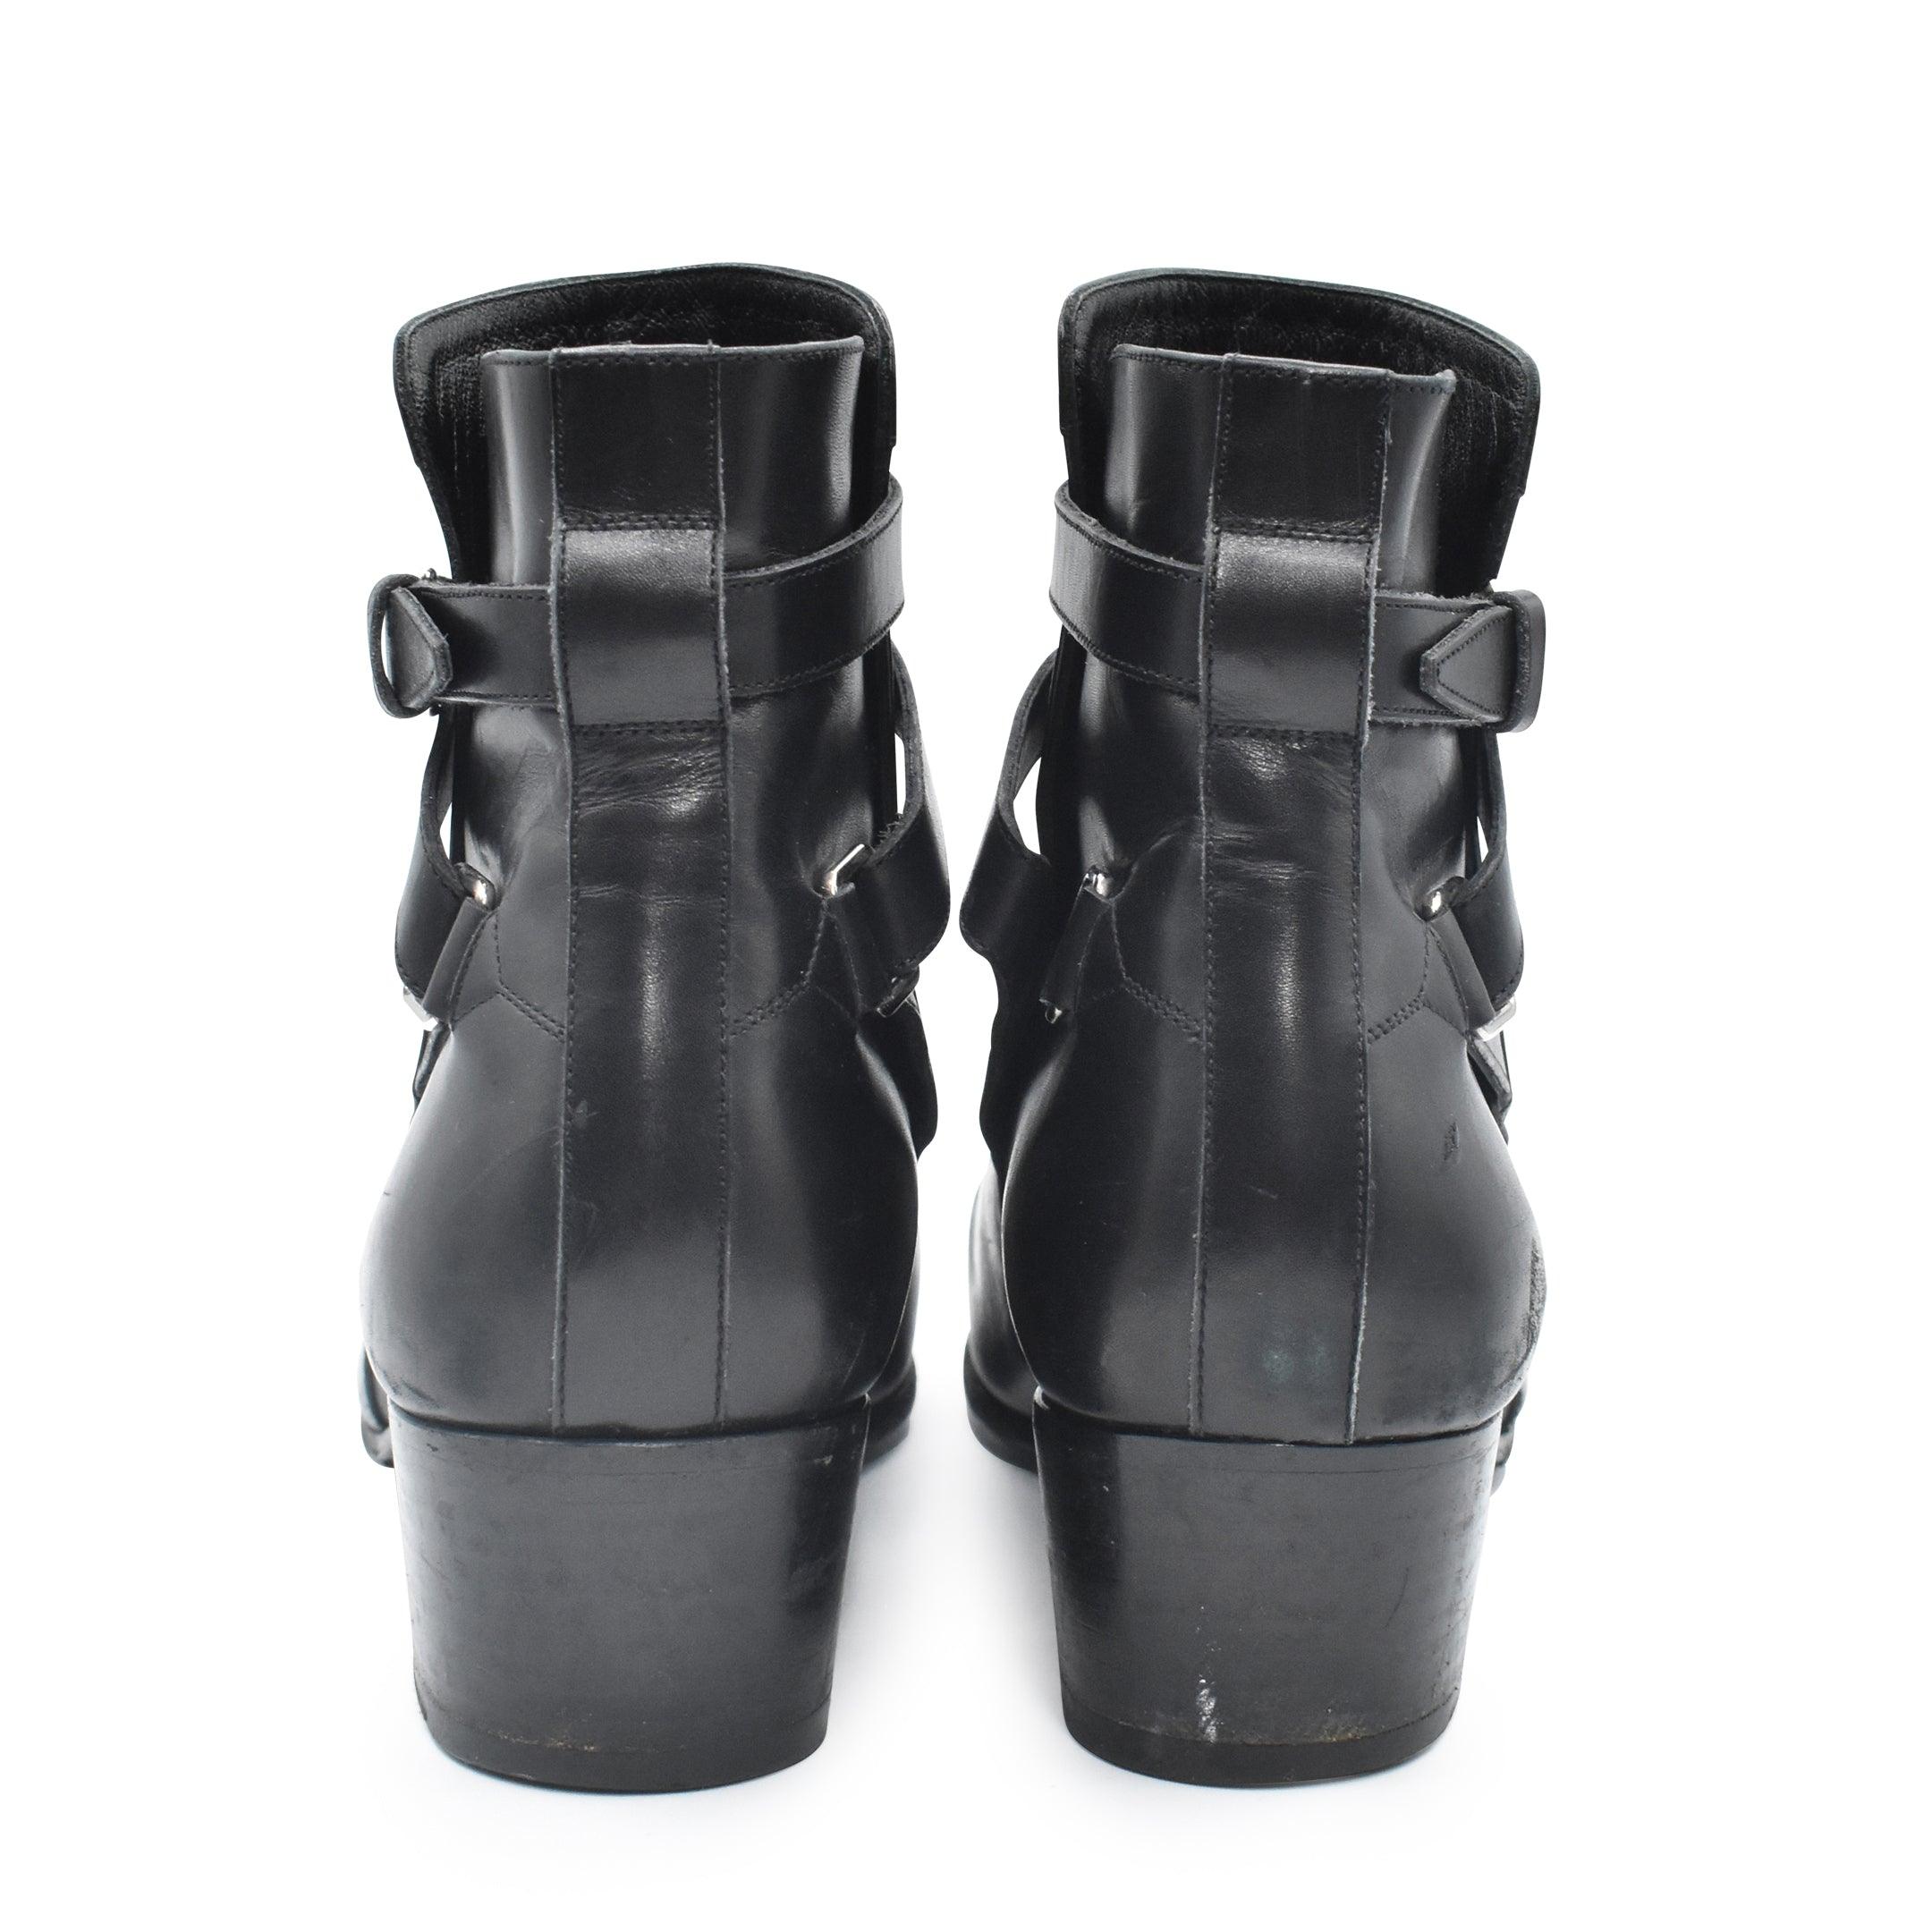 Saint Laurent Ankle Boots - Women's 38.5 - Fashionably Yours